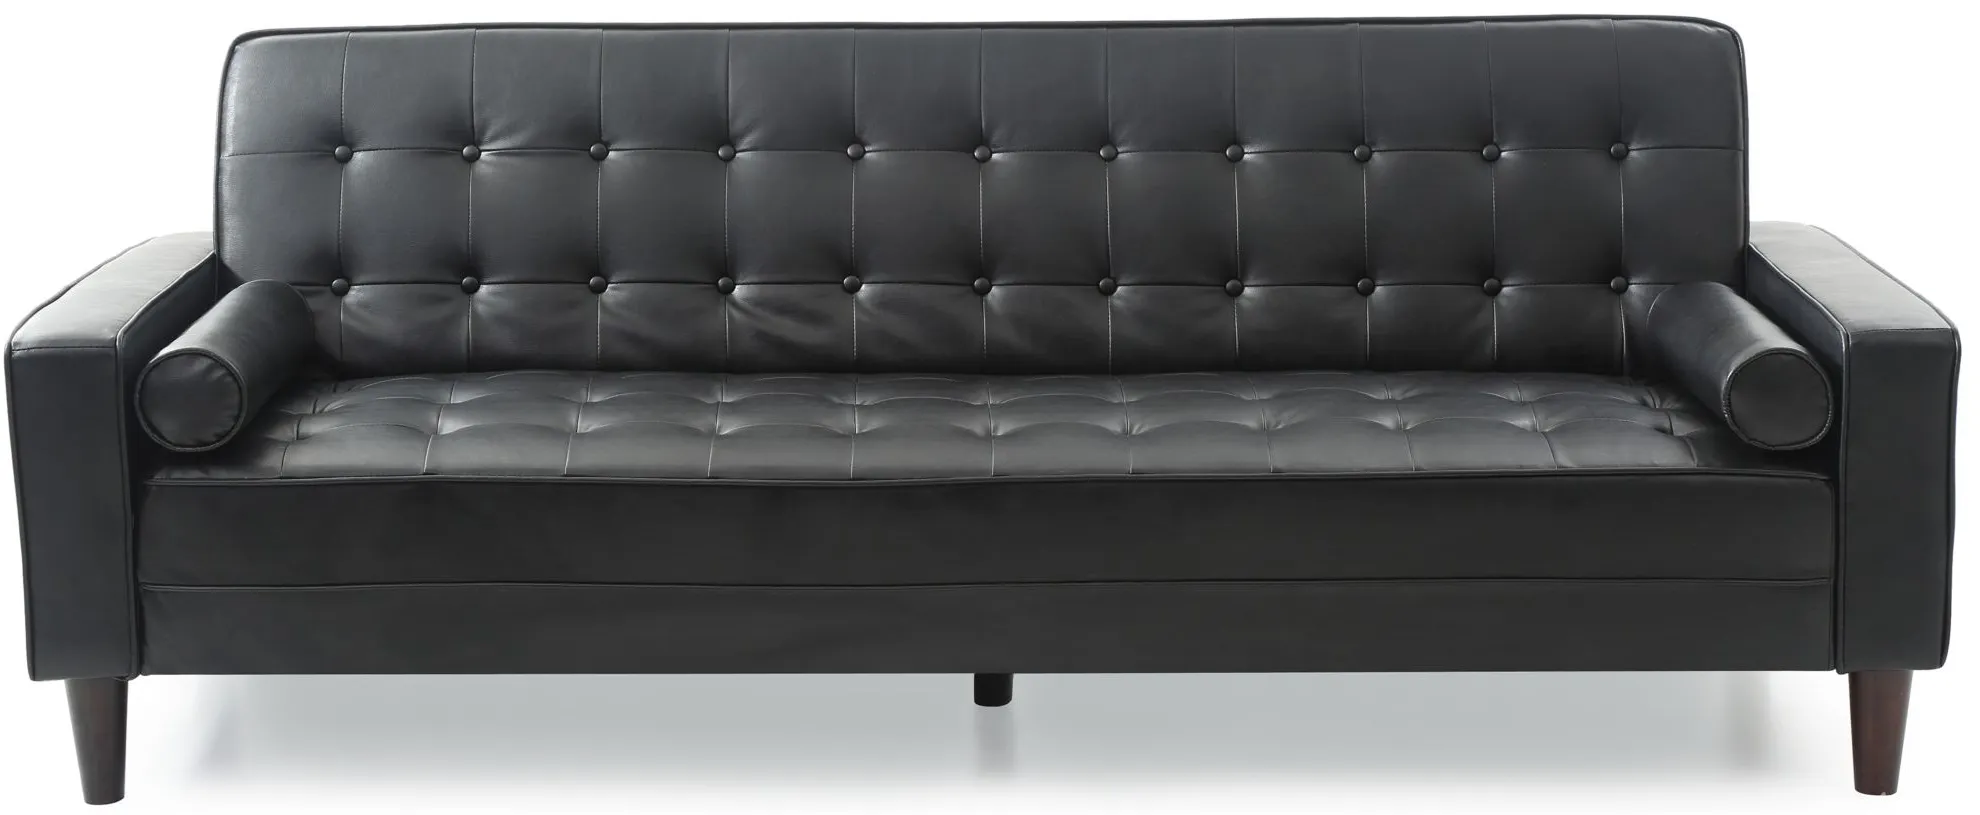 Andrews Klik Klak Sofa in Black by Glory Furniture